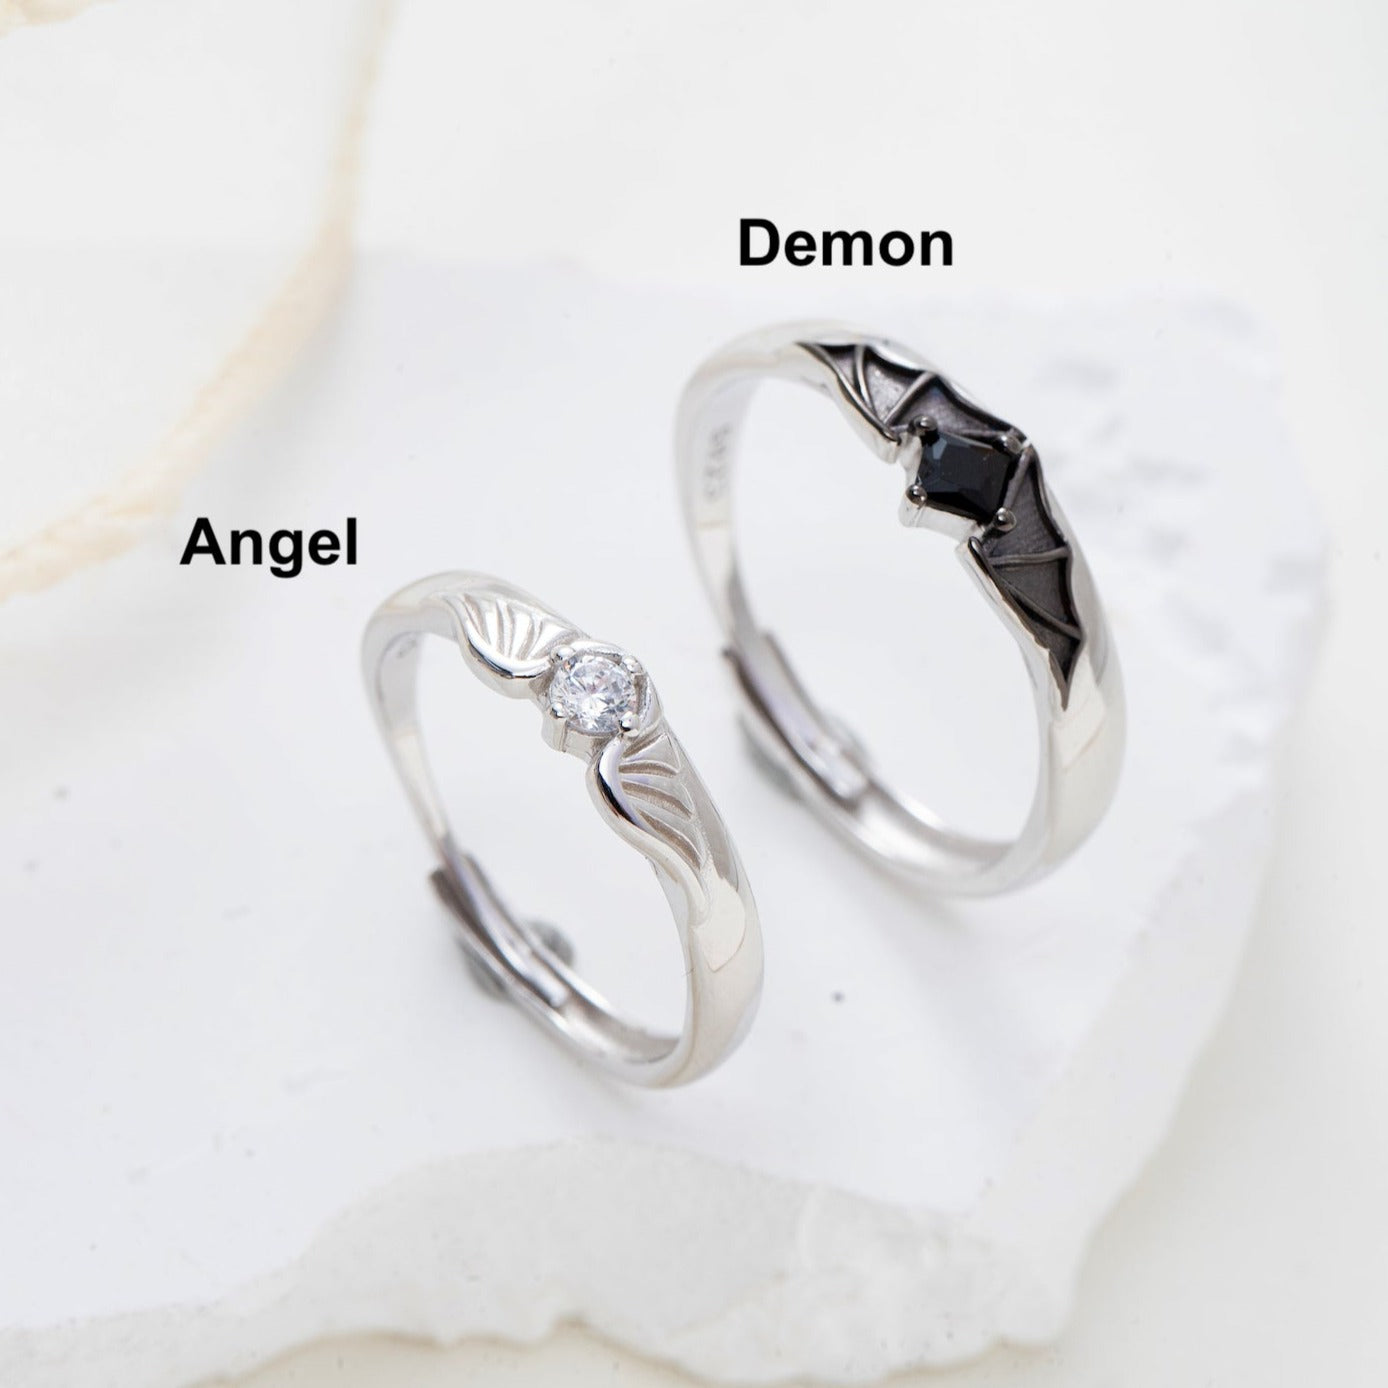 Angel Demon Silver Couple Rings